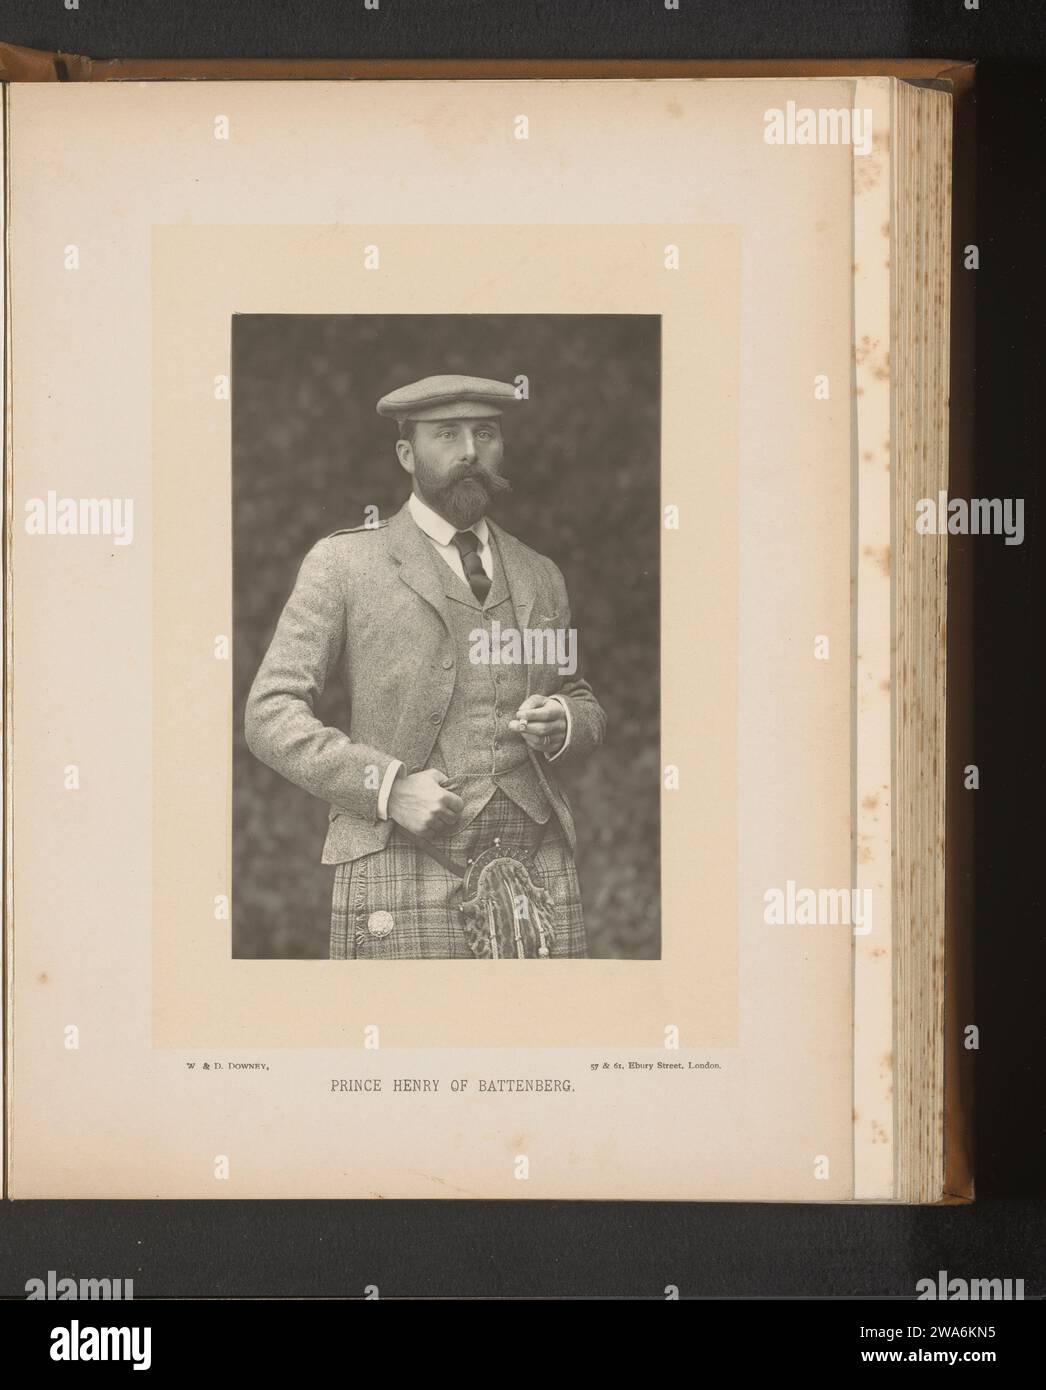 Portret van Henry van Battenberg, William & Daniel Downey, c. 1884 - in o prima del 1894 stampa fotomeccanica London paper Prince Foto Stock